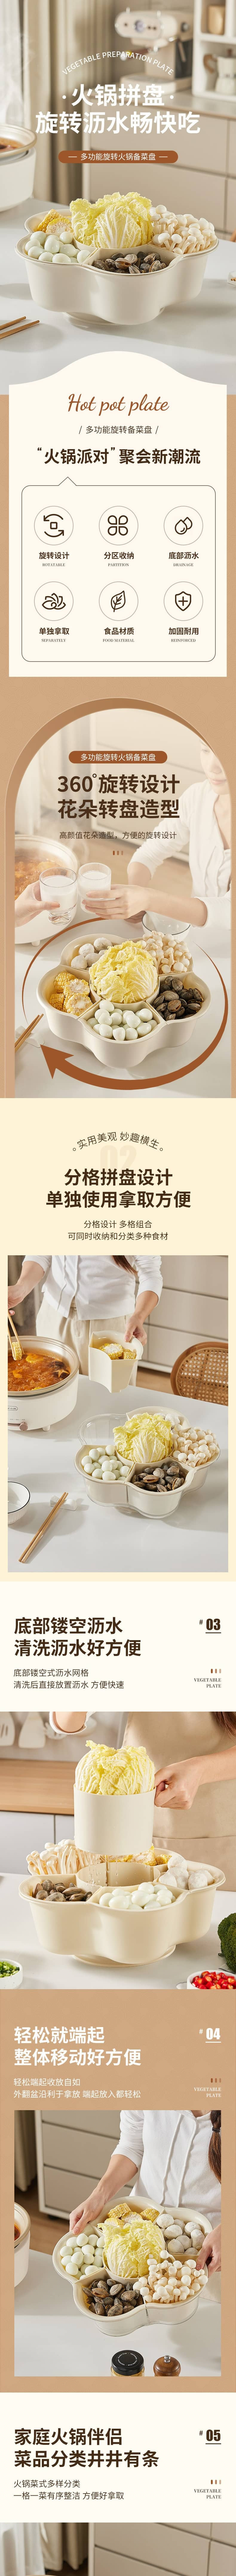  FantianHome 火锅盘六分格可旋转收纳托盘厨房配菜盘客厅茶几零食坚果盘